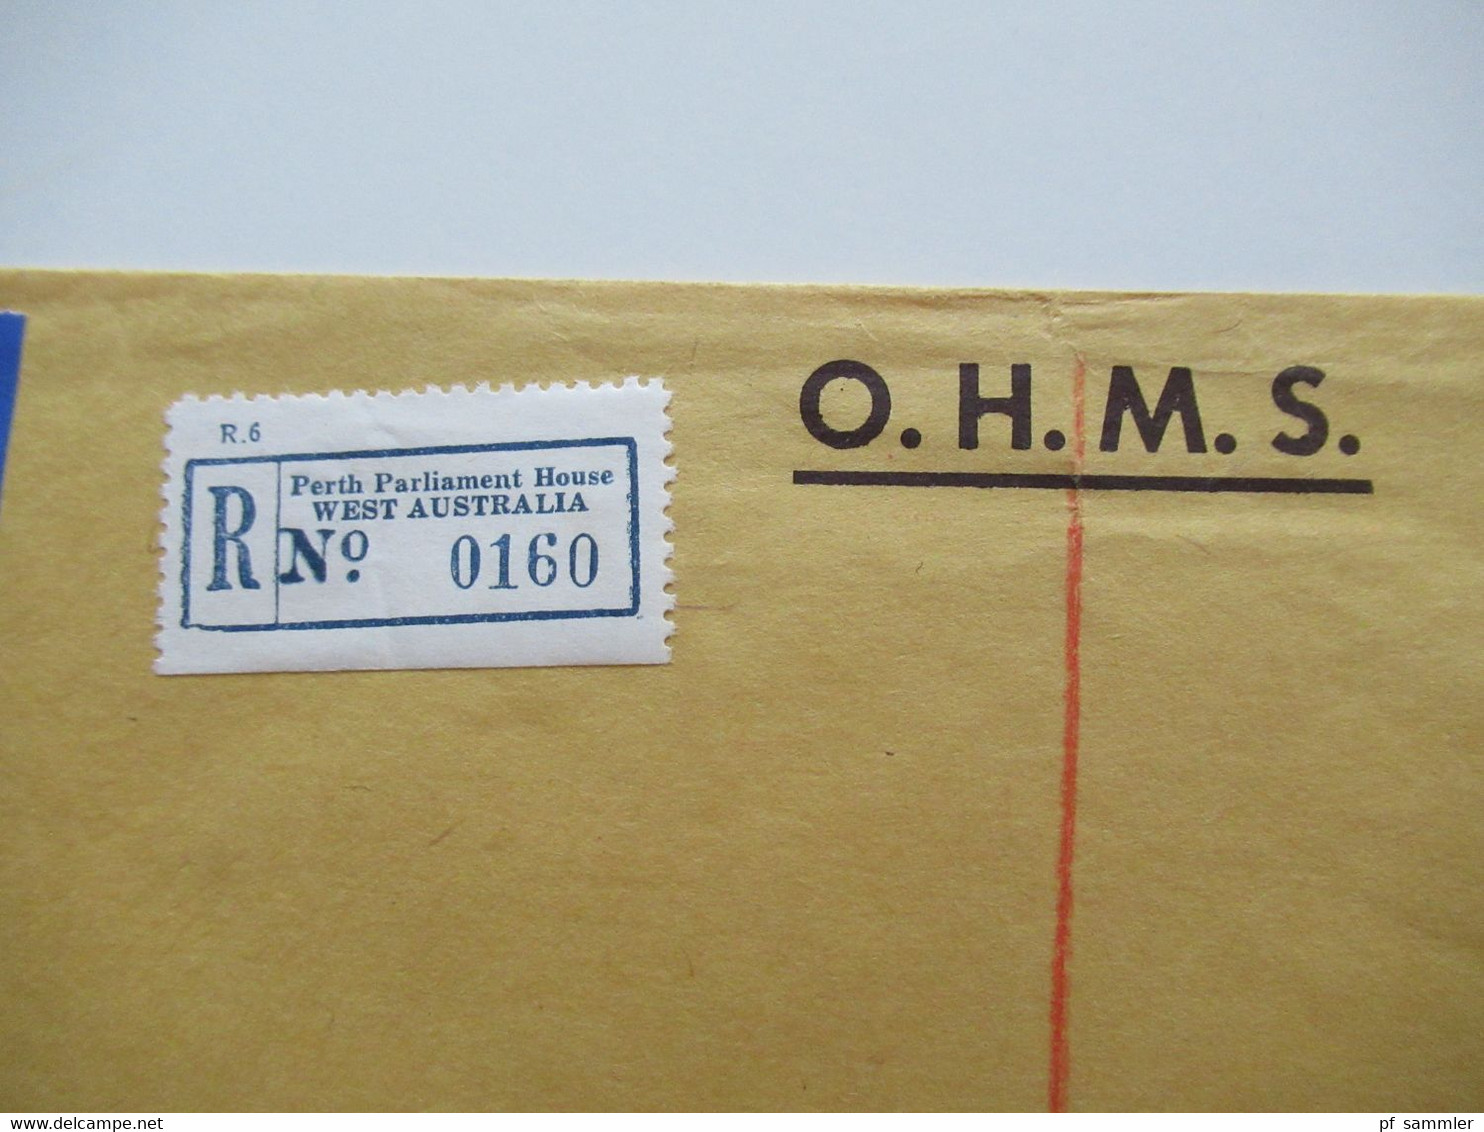 1980 Umschlag OHMS Und Stempel Legislative Council Parliament House Perth W.A Einschreiben Perth Parliament House - Covers & Documents